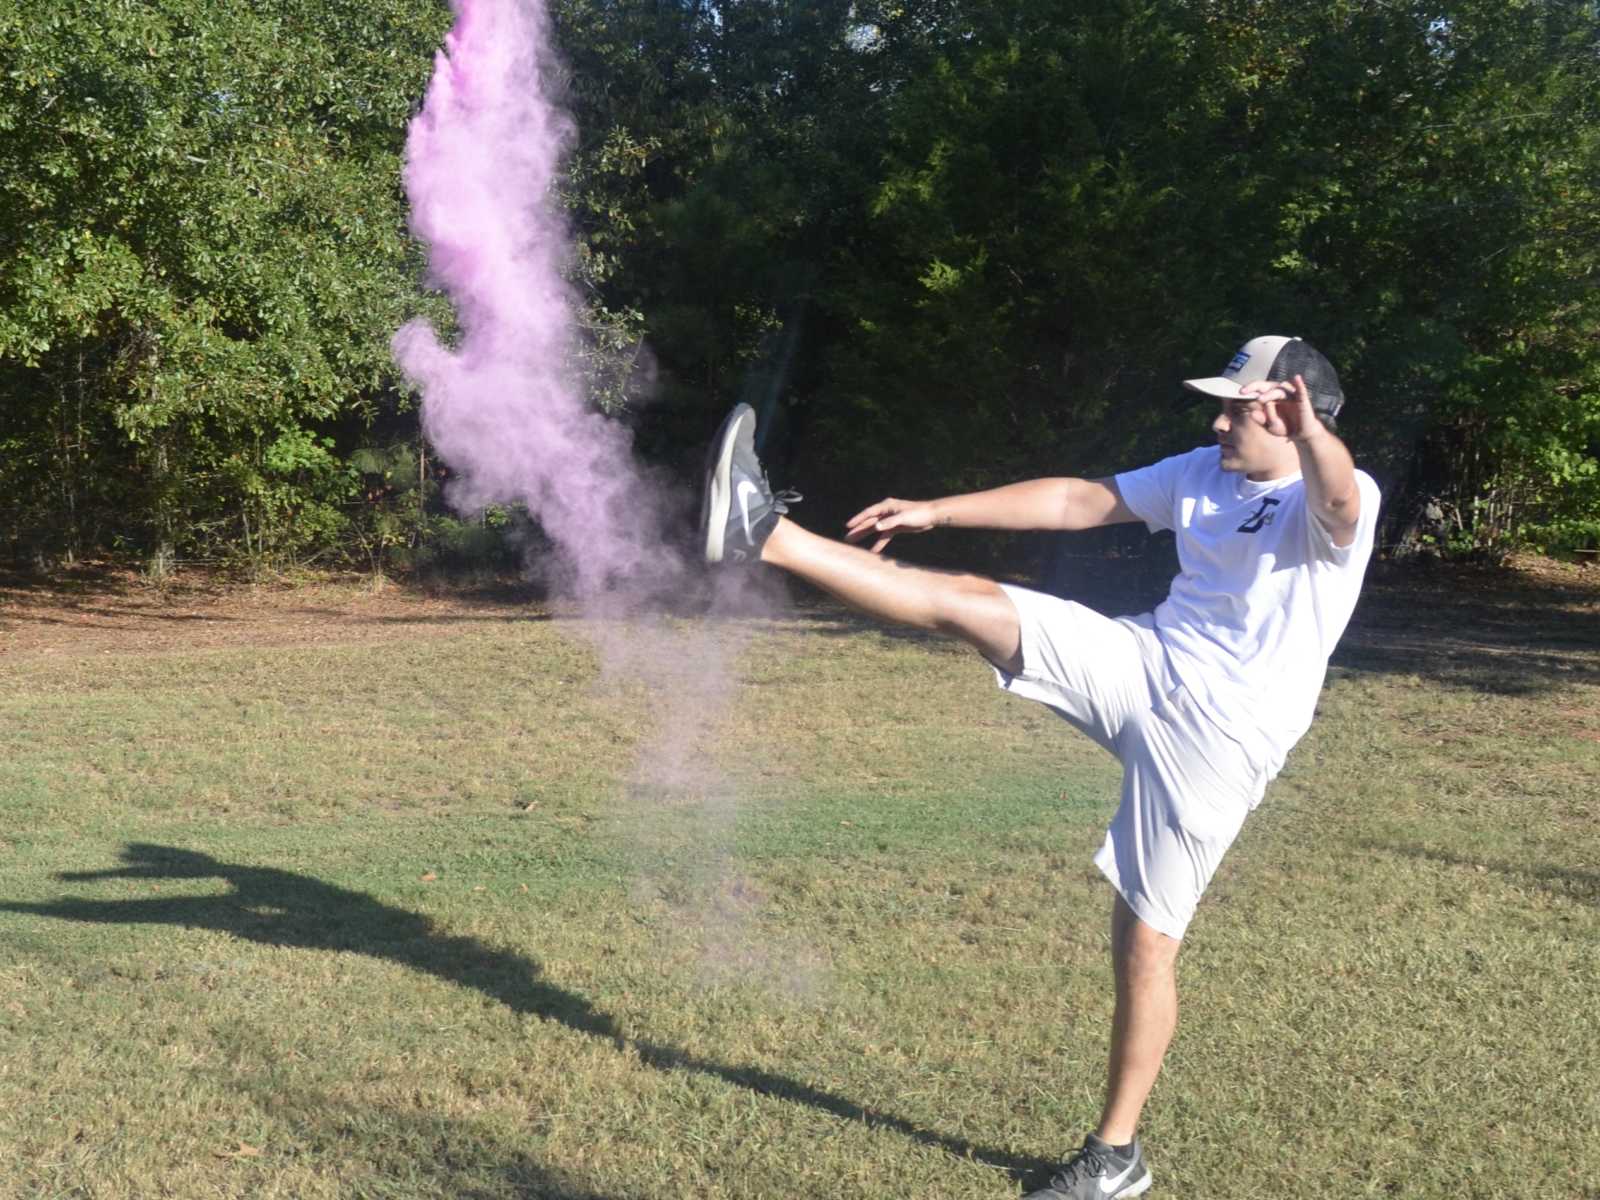 Man kicks the air full of pink smoke at gender reveal